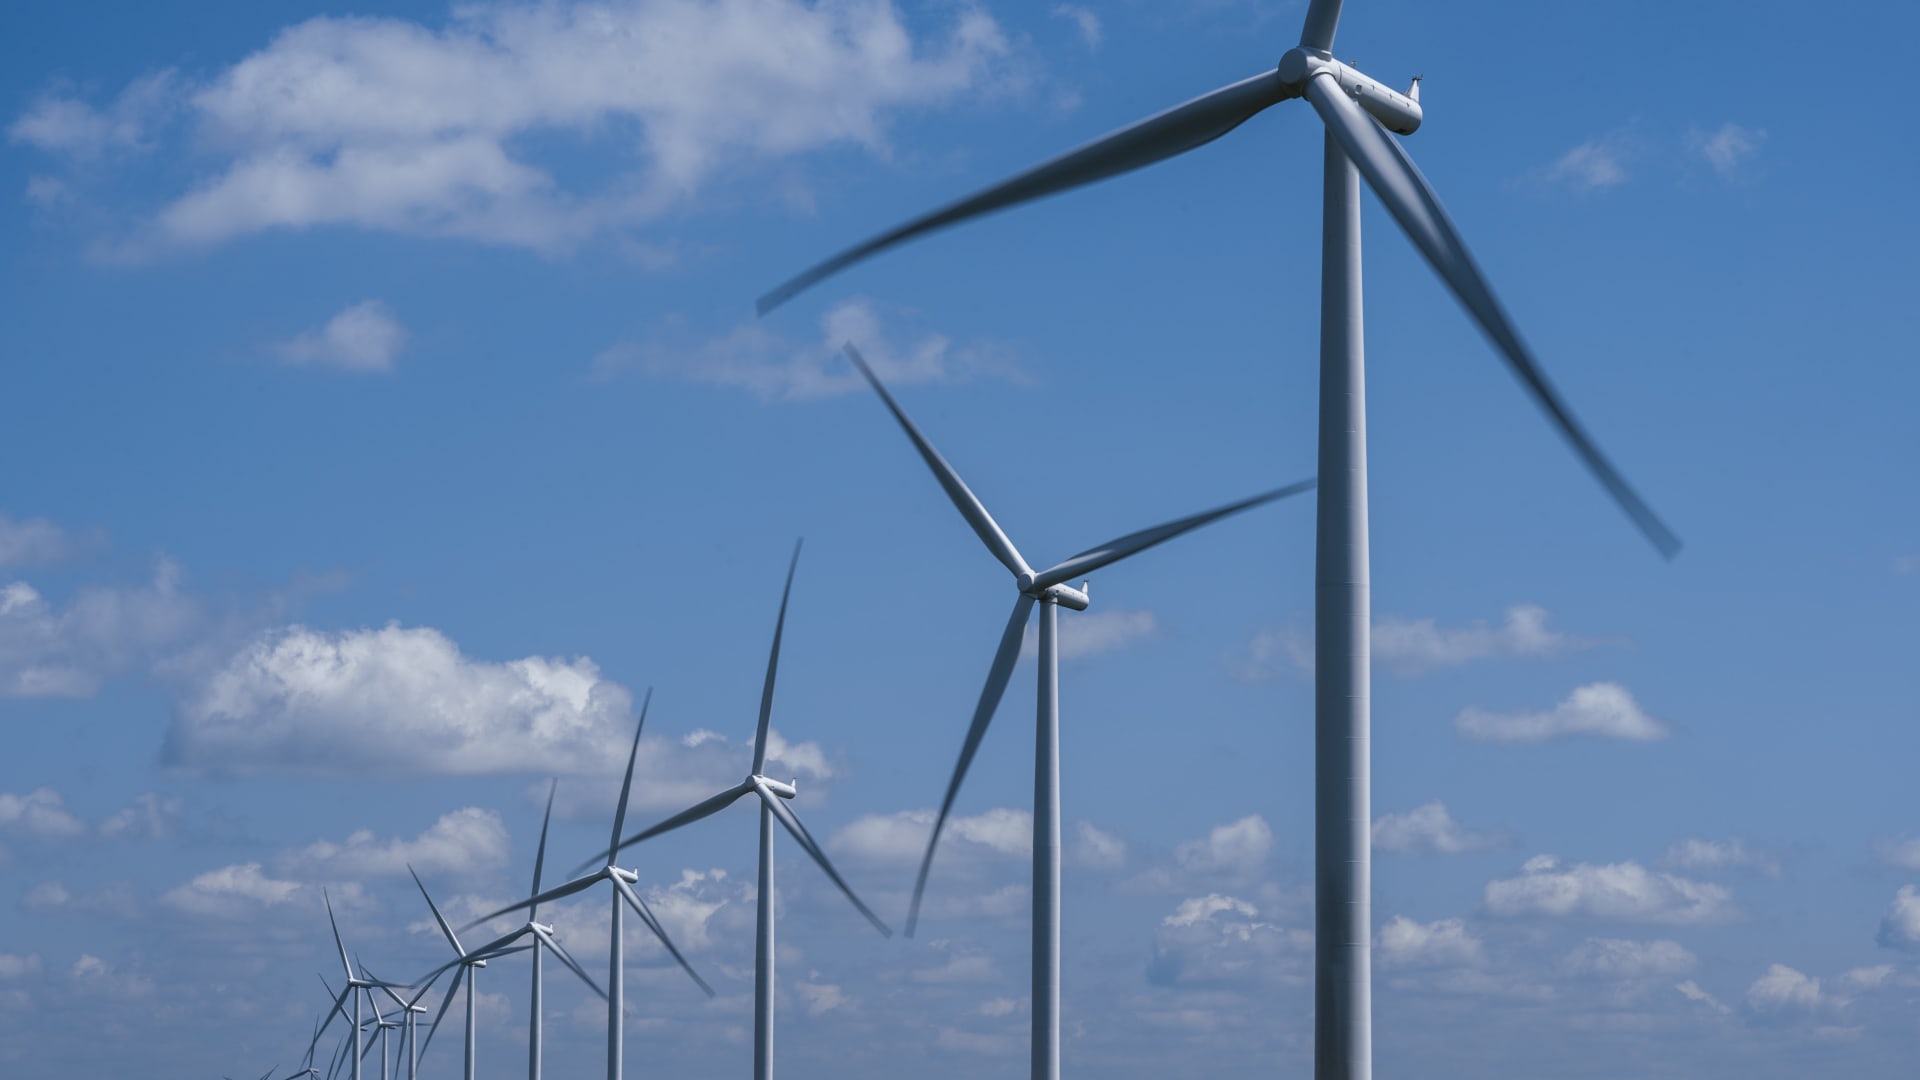 Siemens wind turbines operate on a wind farm in Marshalltown, Iowa, managed Berkshire Hathaway Energy's MidAmerican Energy.